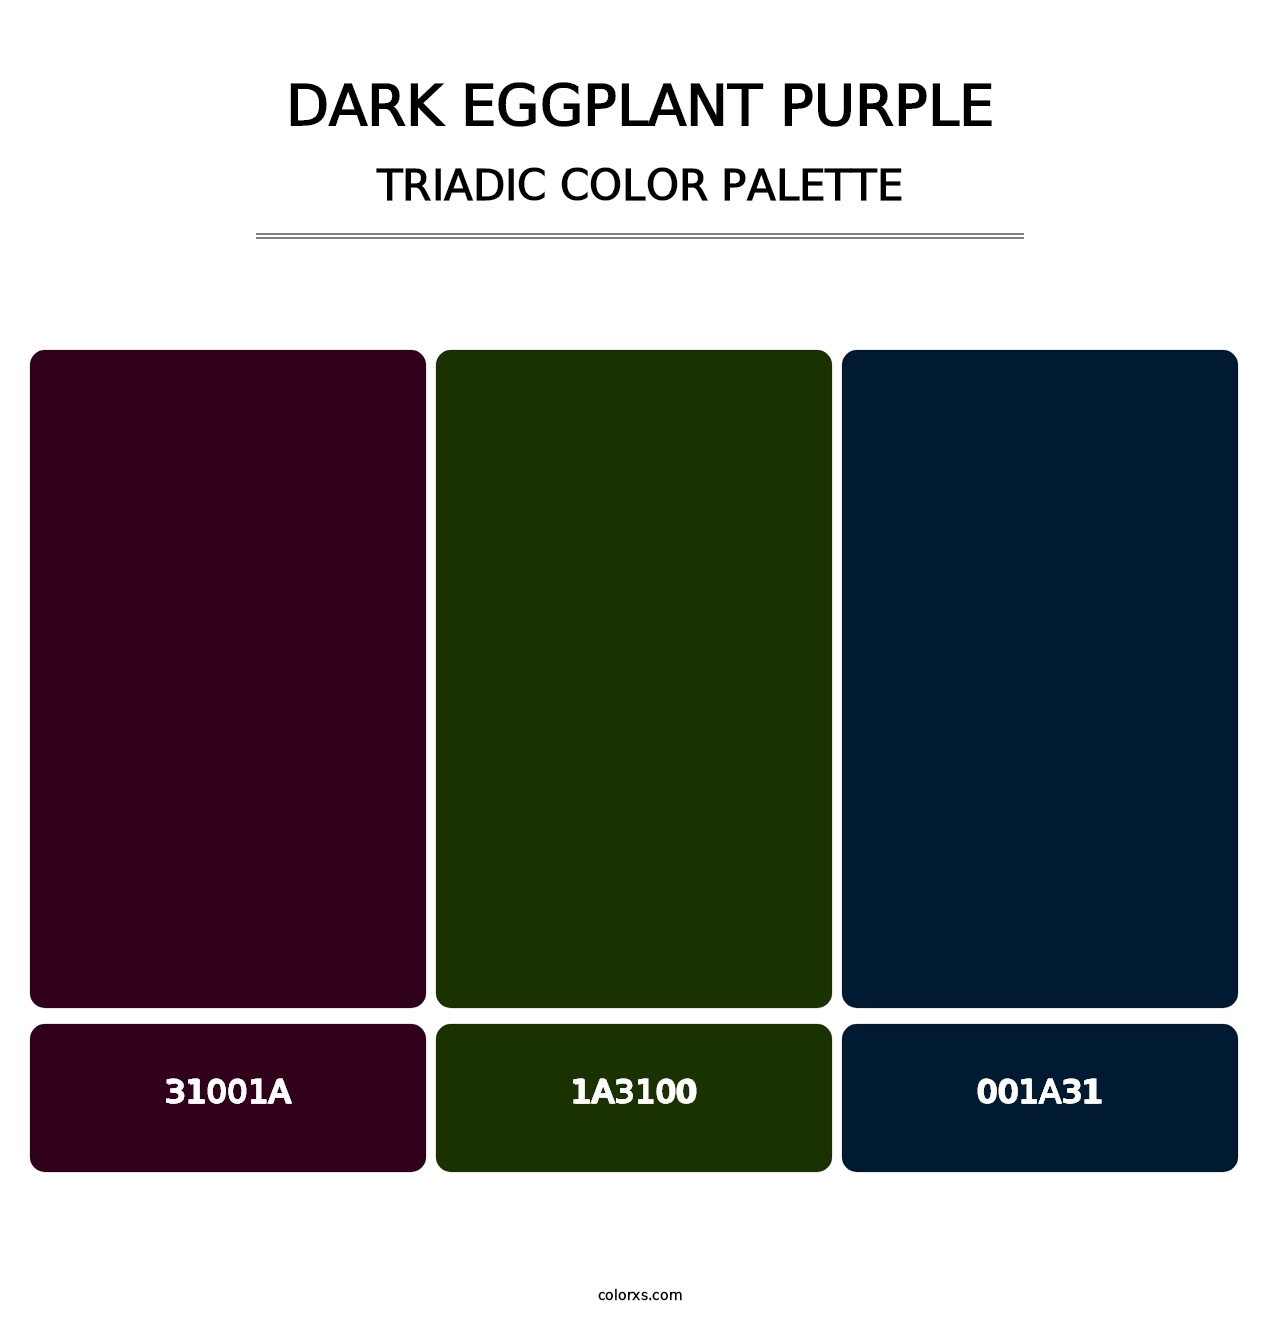 Dark Eggplant Purple - Triadic Color Palette